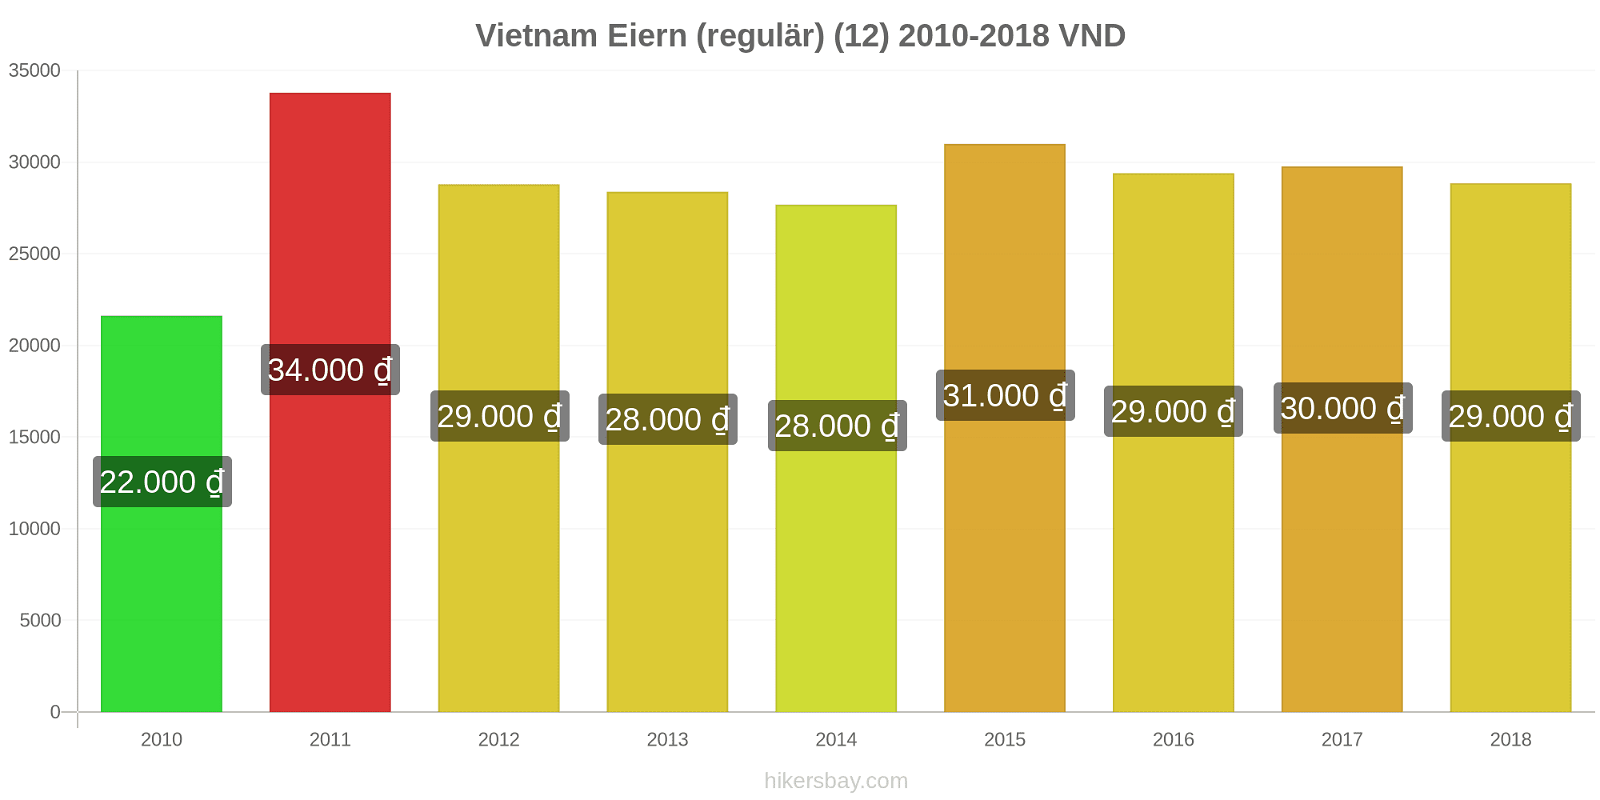 Vietnam Preisänderungen Eier (regelmäßig) (12) hikersbay.com